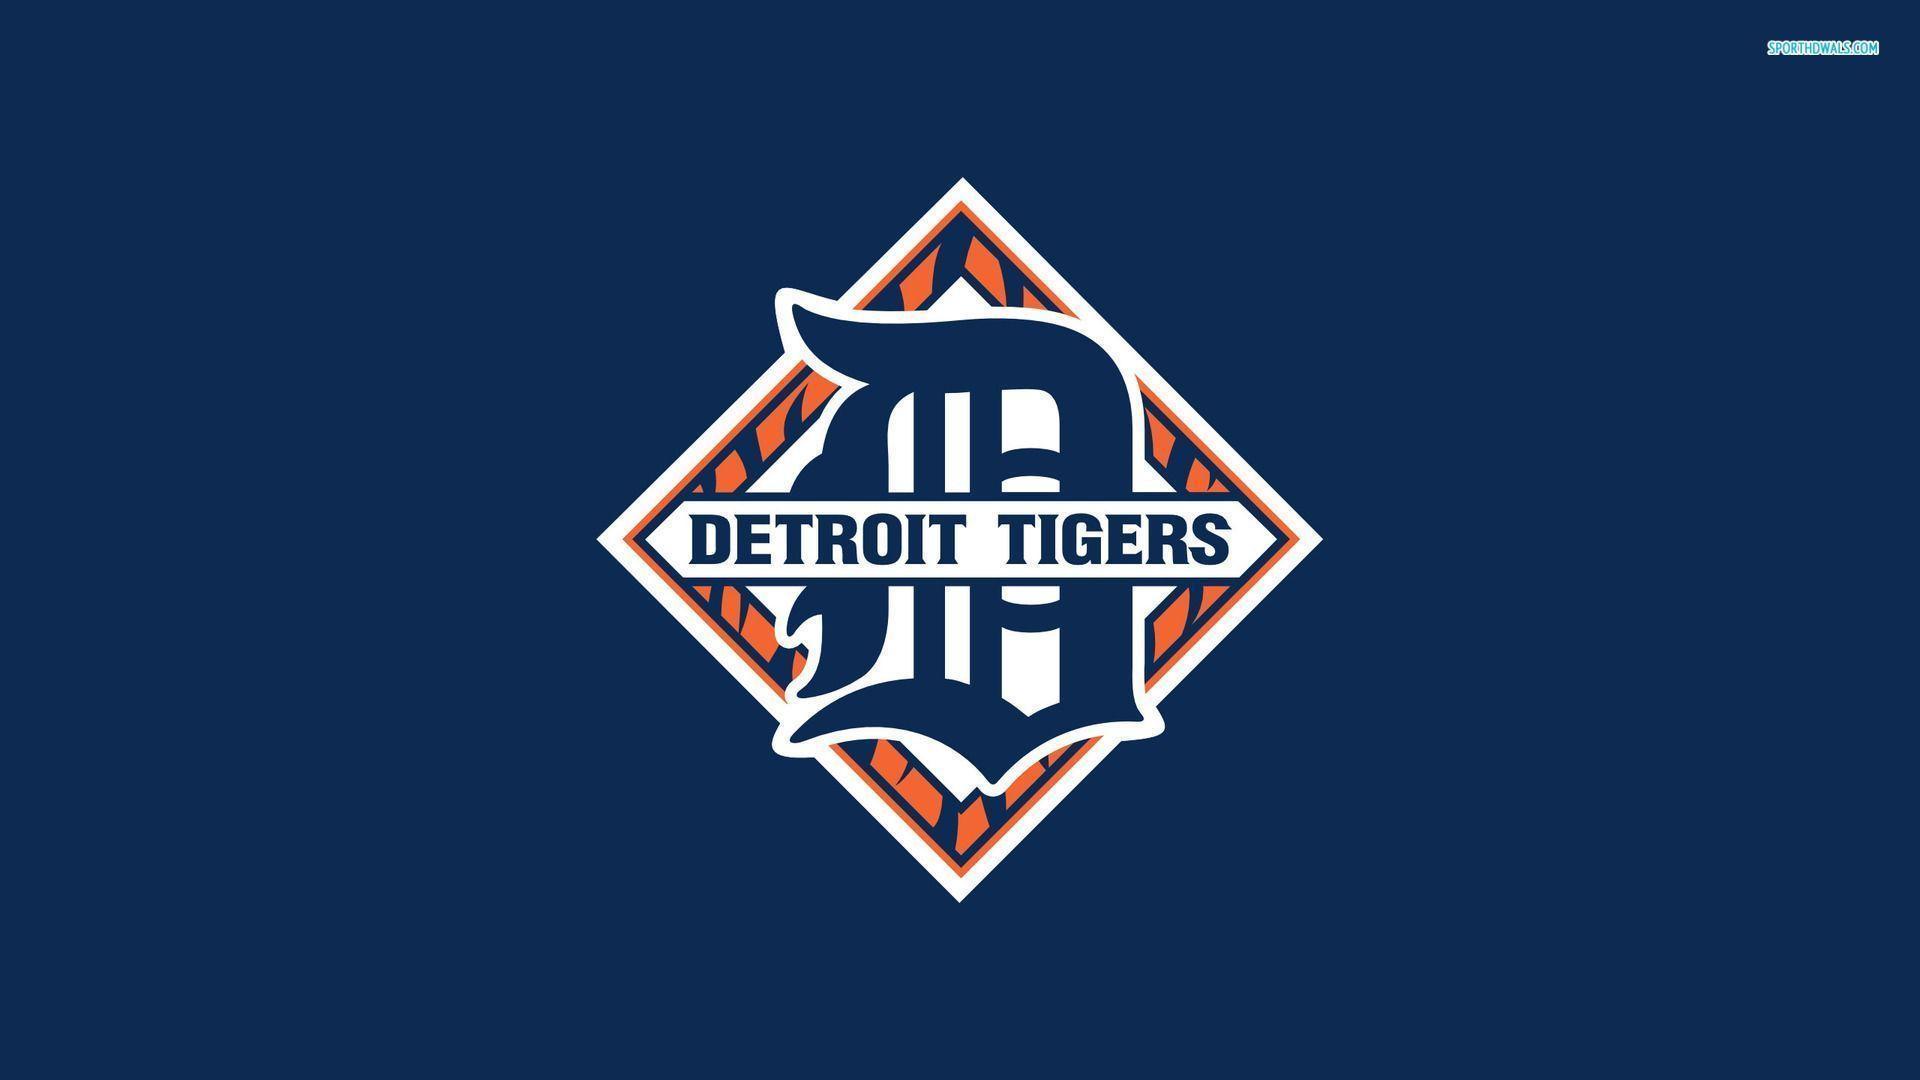 Detroit Tigers 154